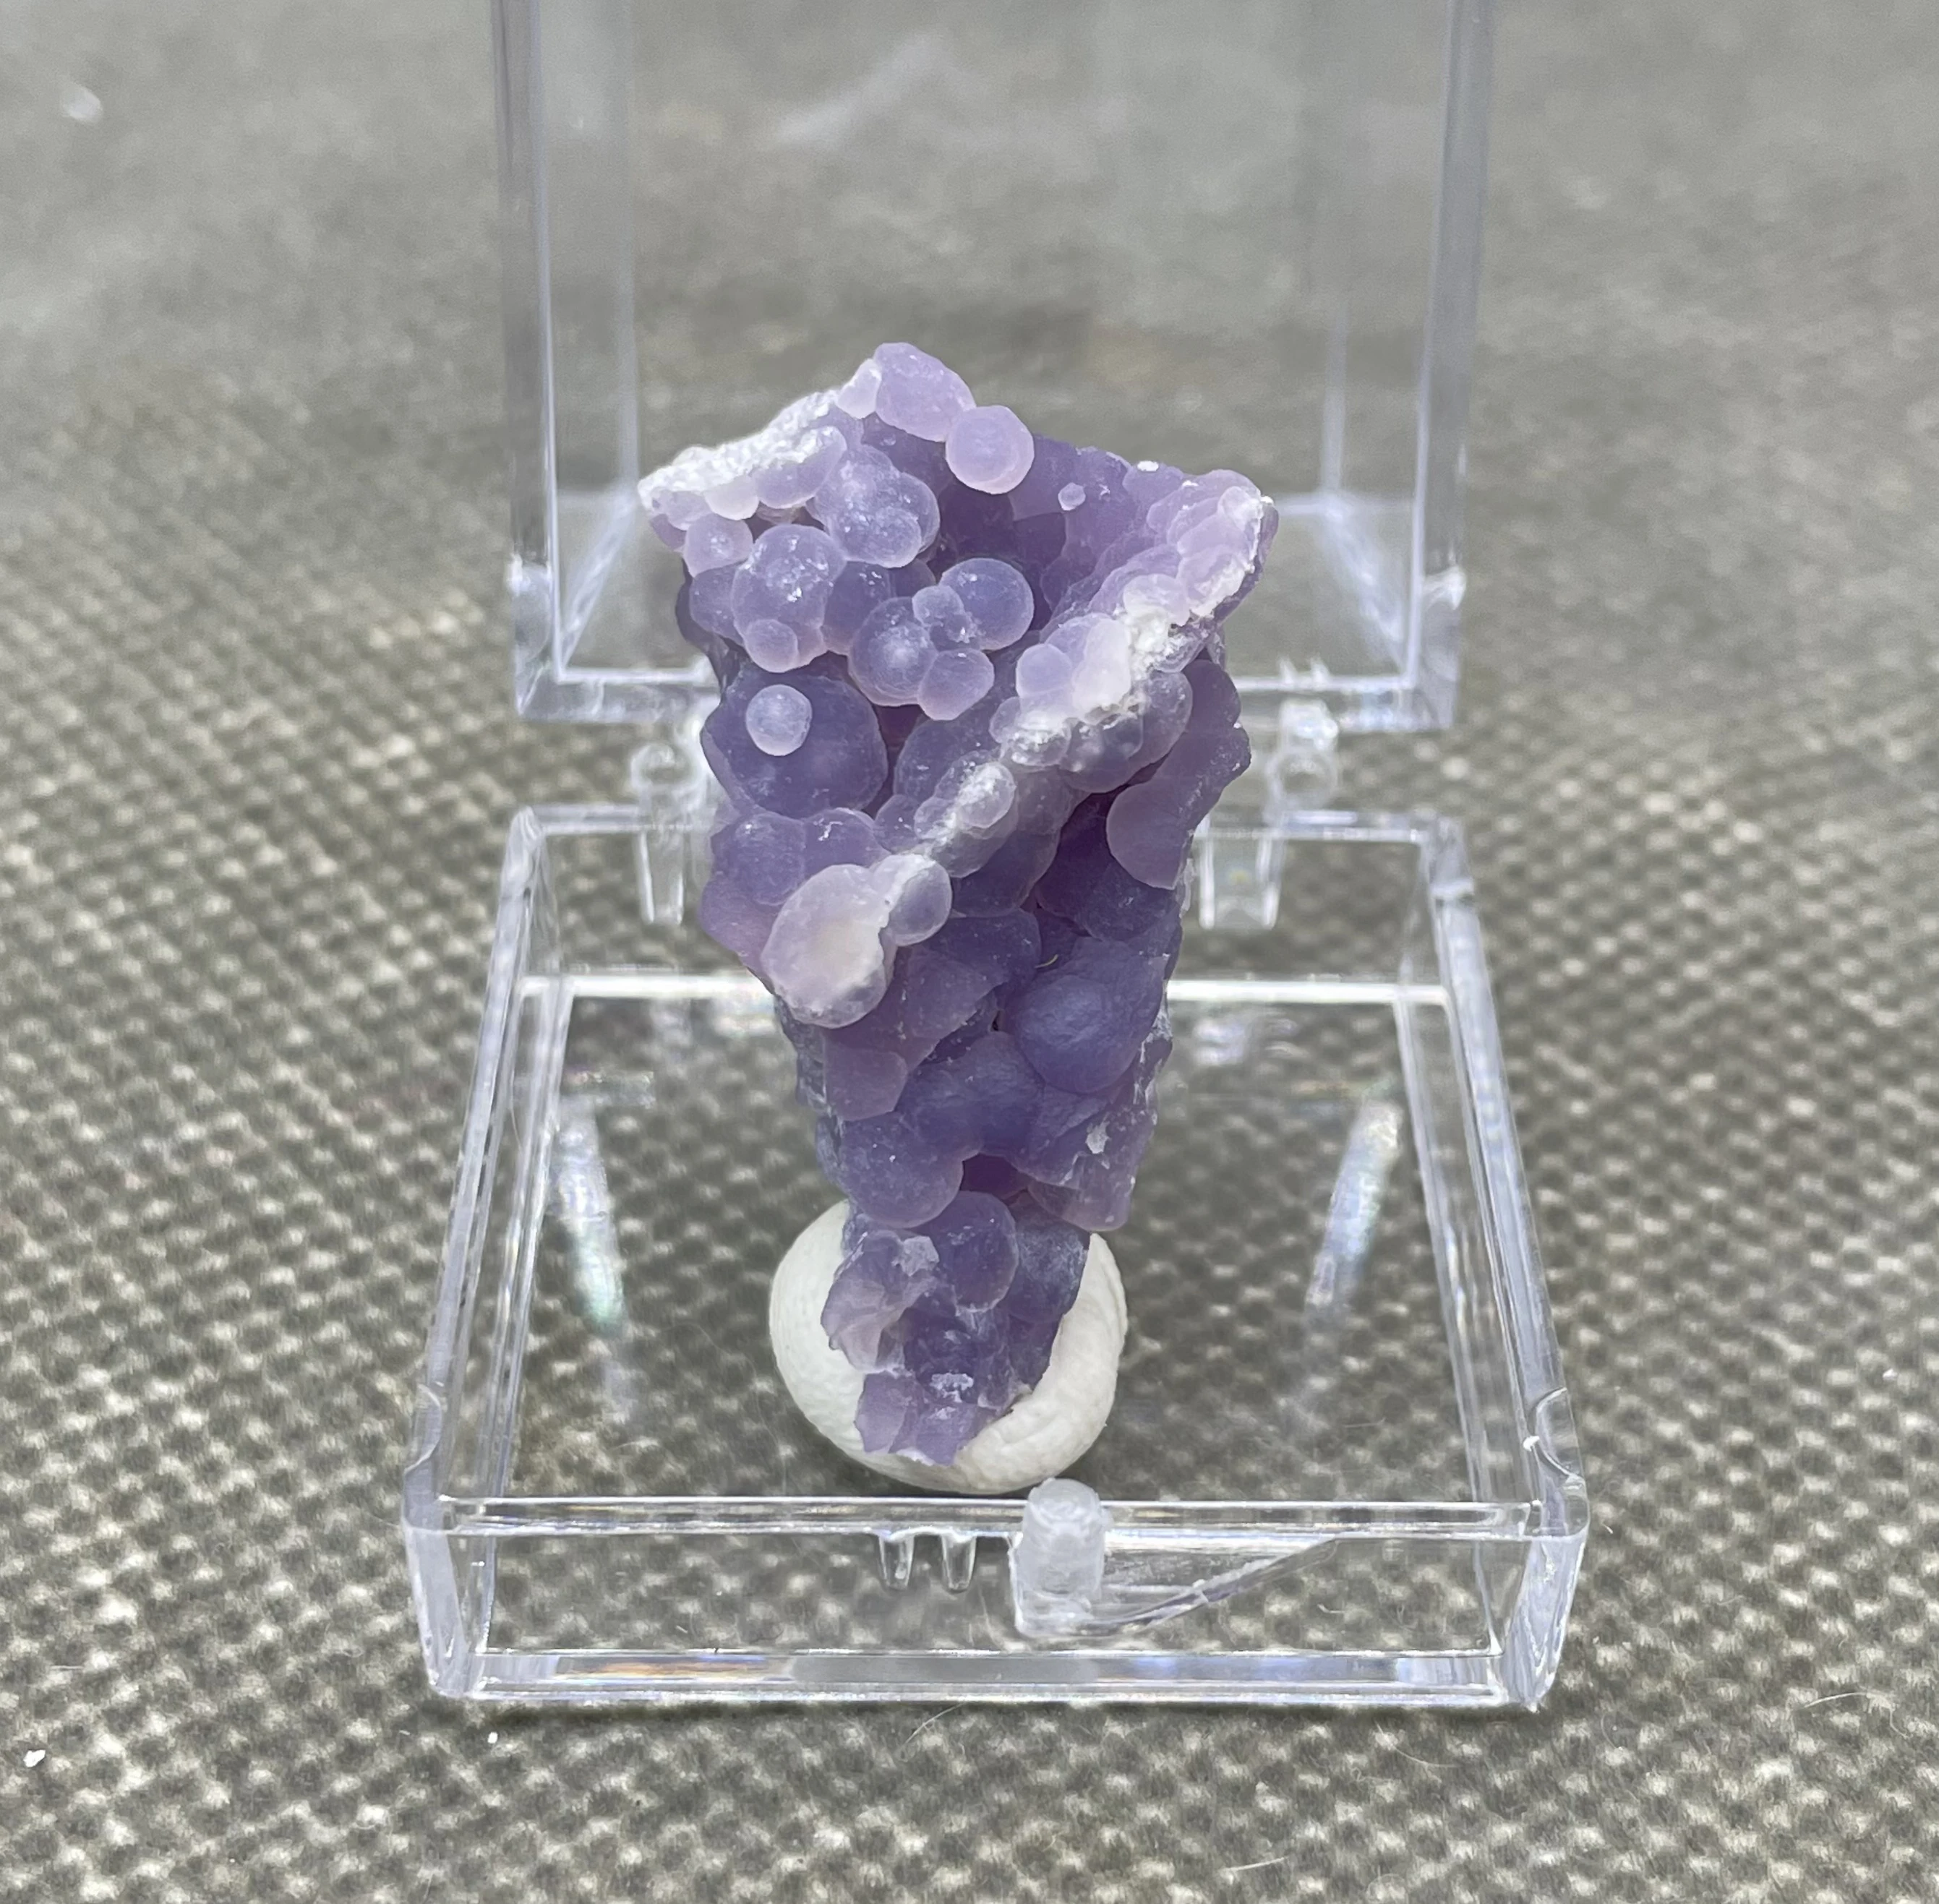 

NEW! 100% natural grape agate mineral specimen stones and crystals healing crystals quartz gemstones (box size 3.4 cm)